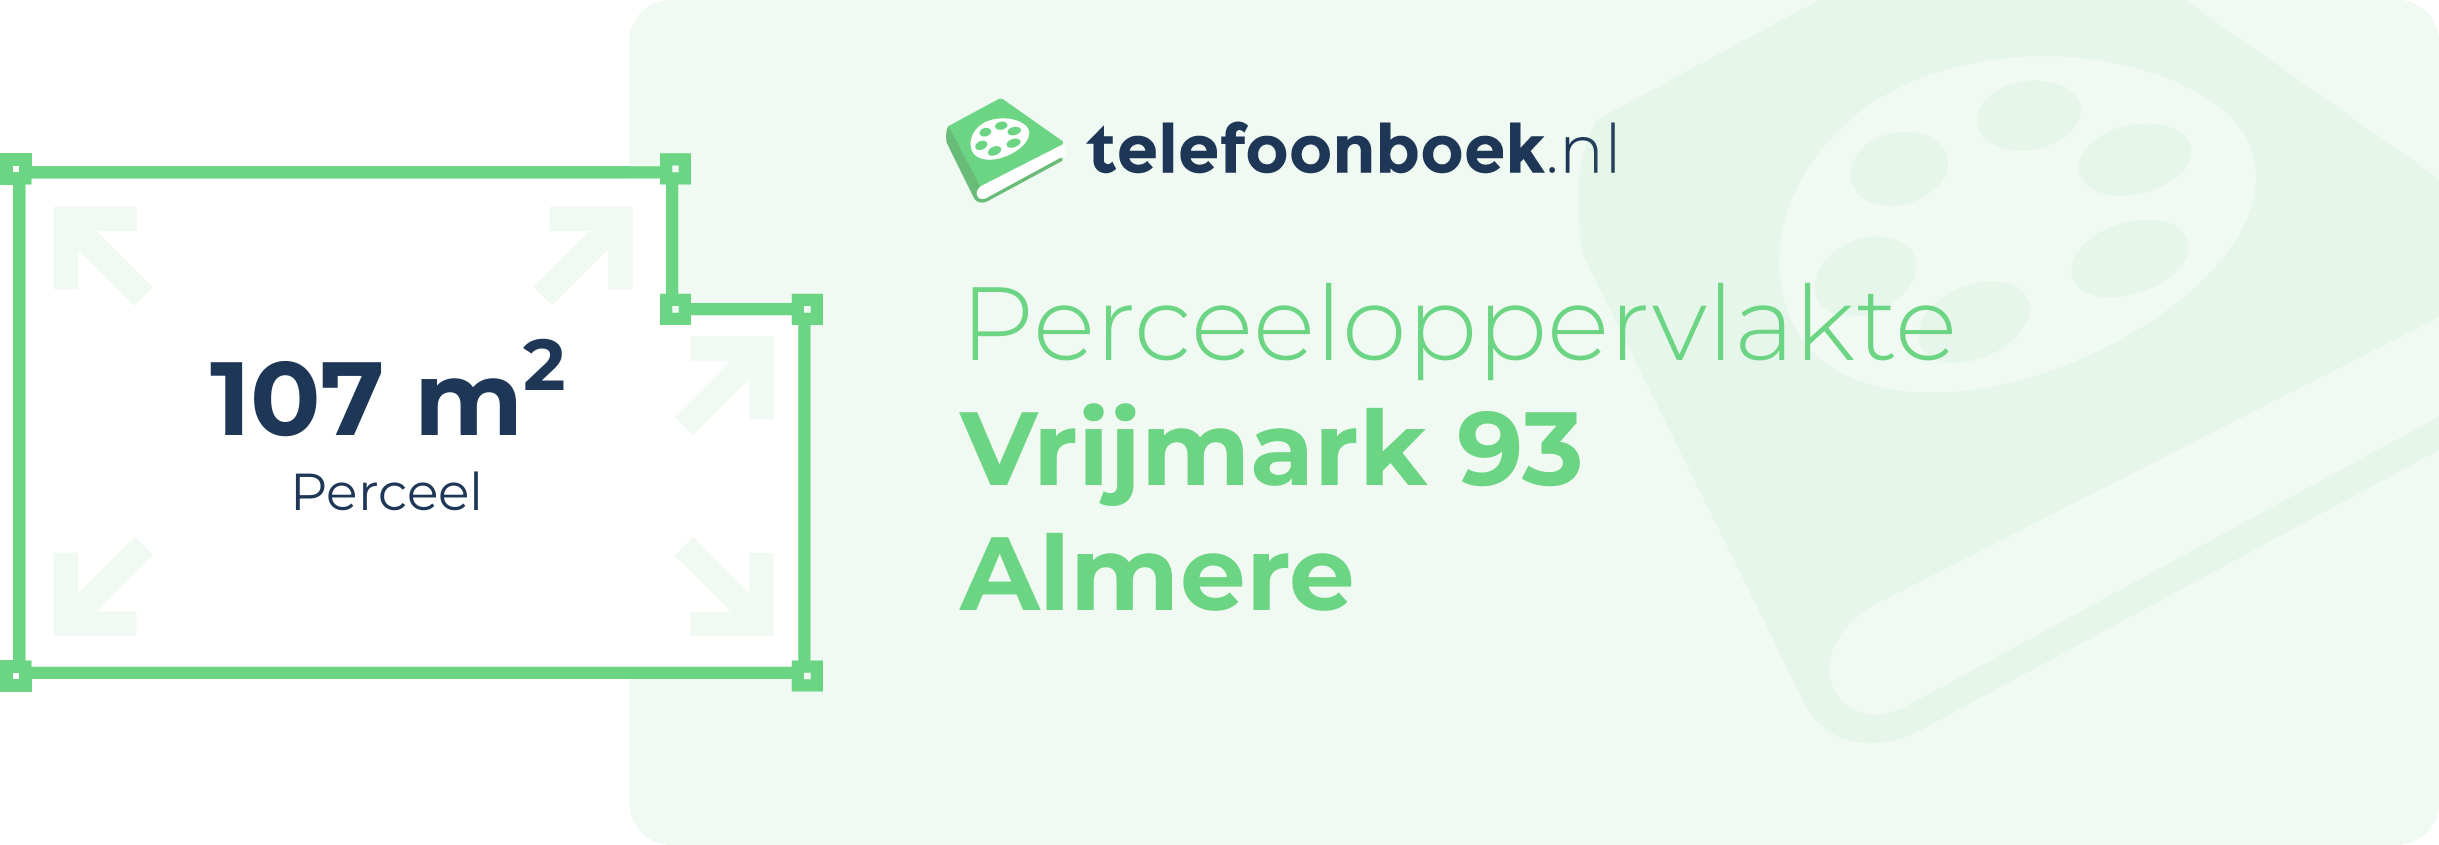 Perceeloppervlakte Vrijmark 93 Almere